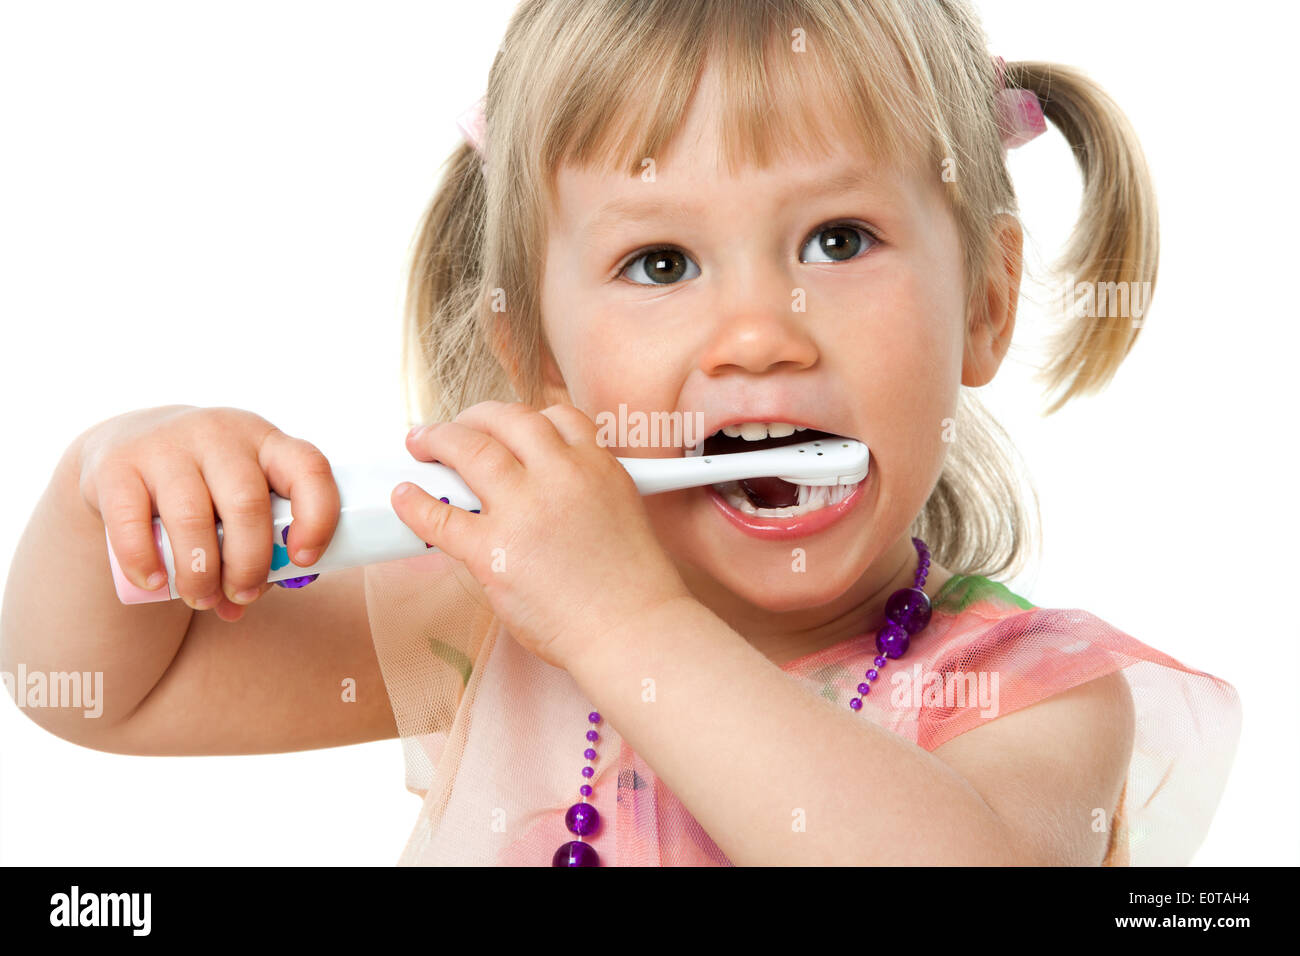 Close up portrait of little girl brushing teeth.Isolated on white background. Stock Photo